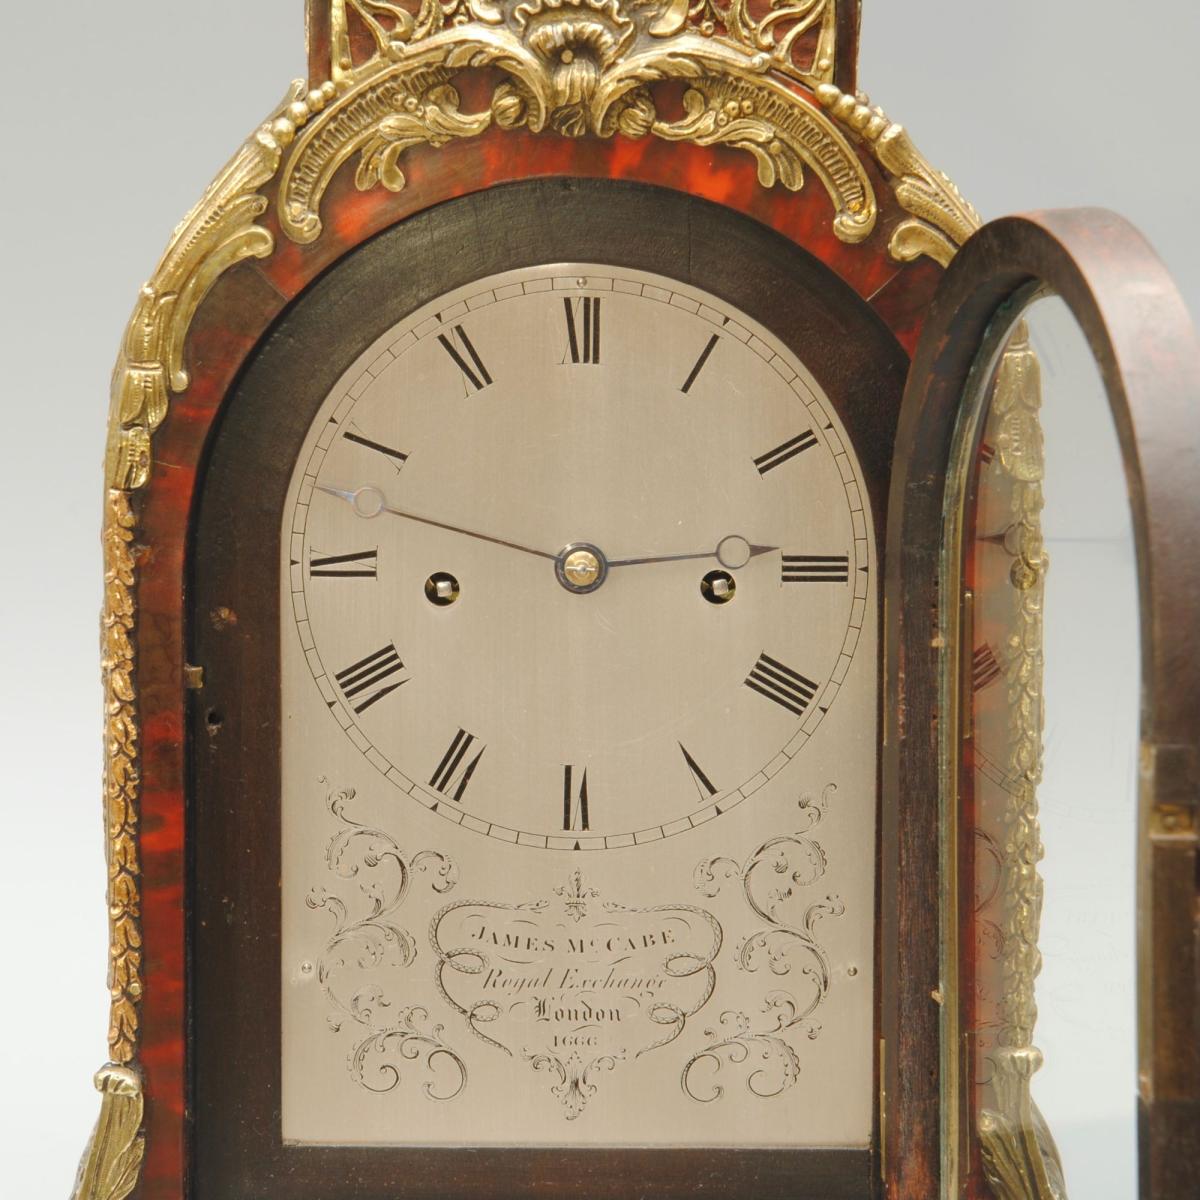 James McCabe Tortoiseshell and Ormolu Mounted Mantle Clock No. 1666